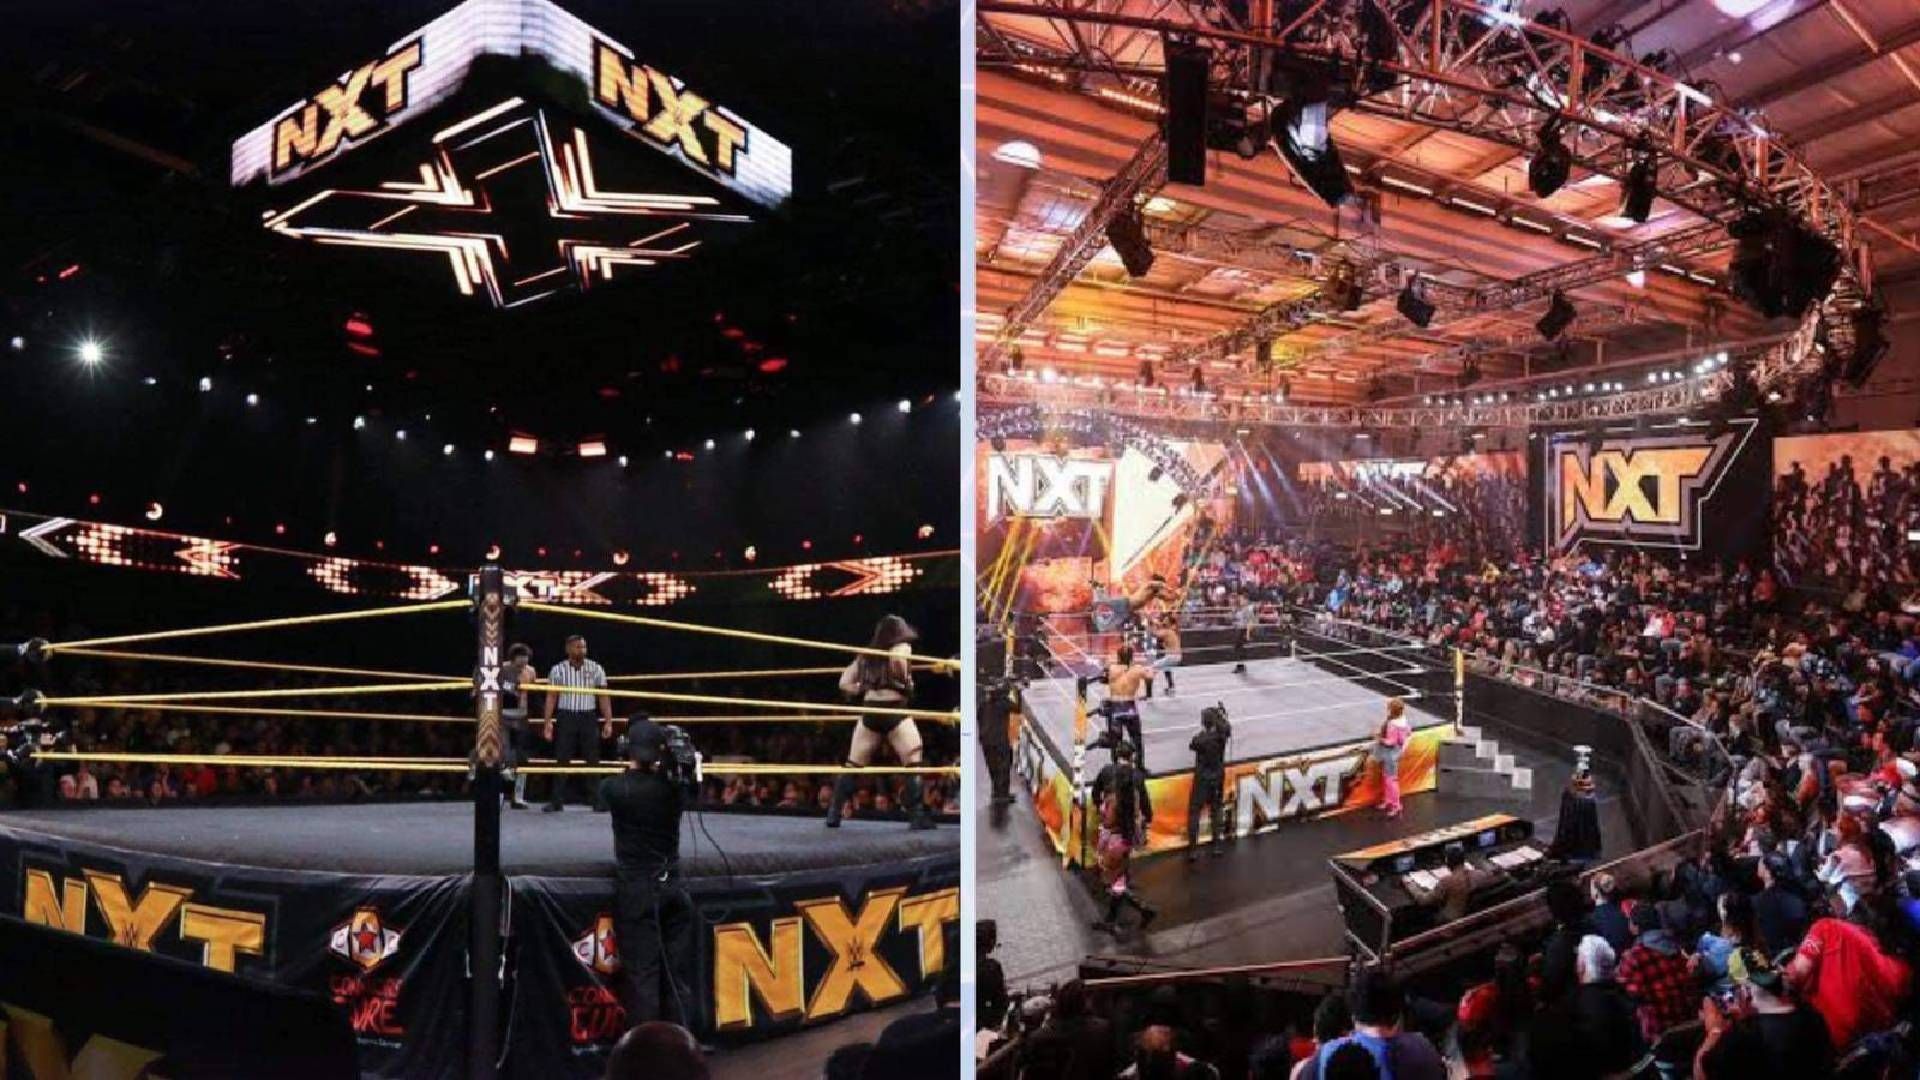 NXT arena